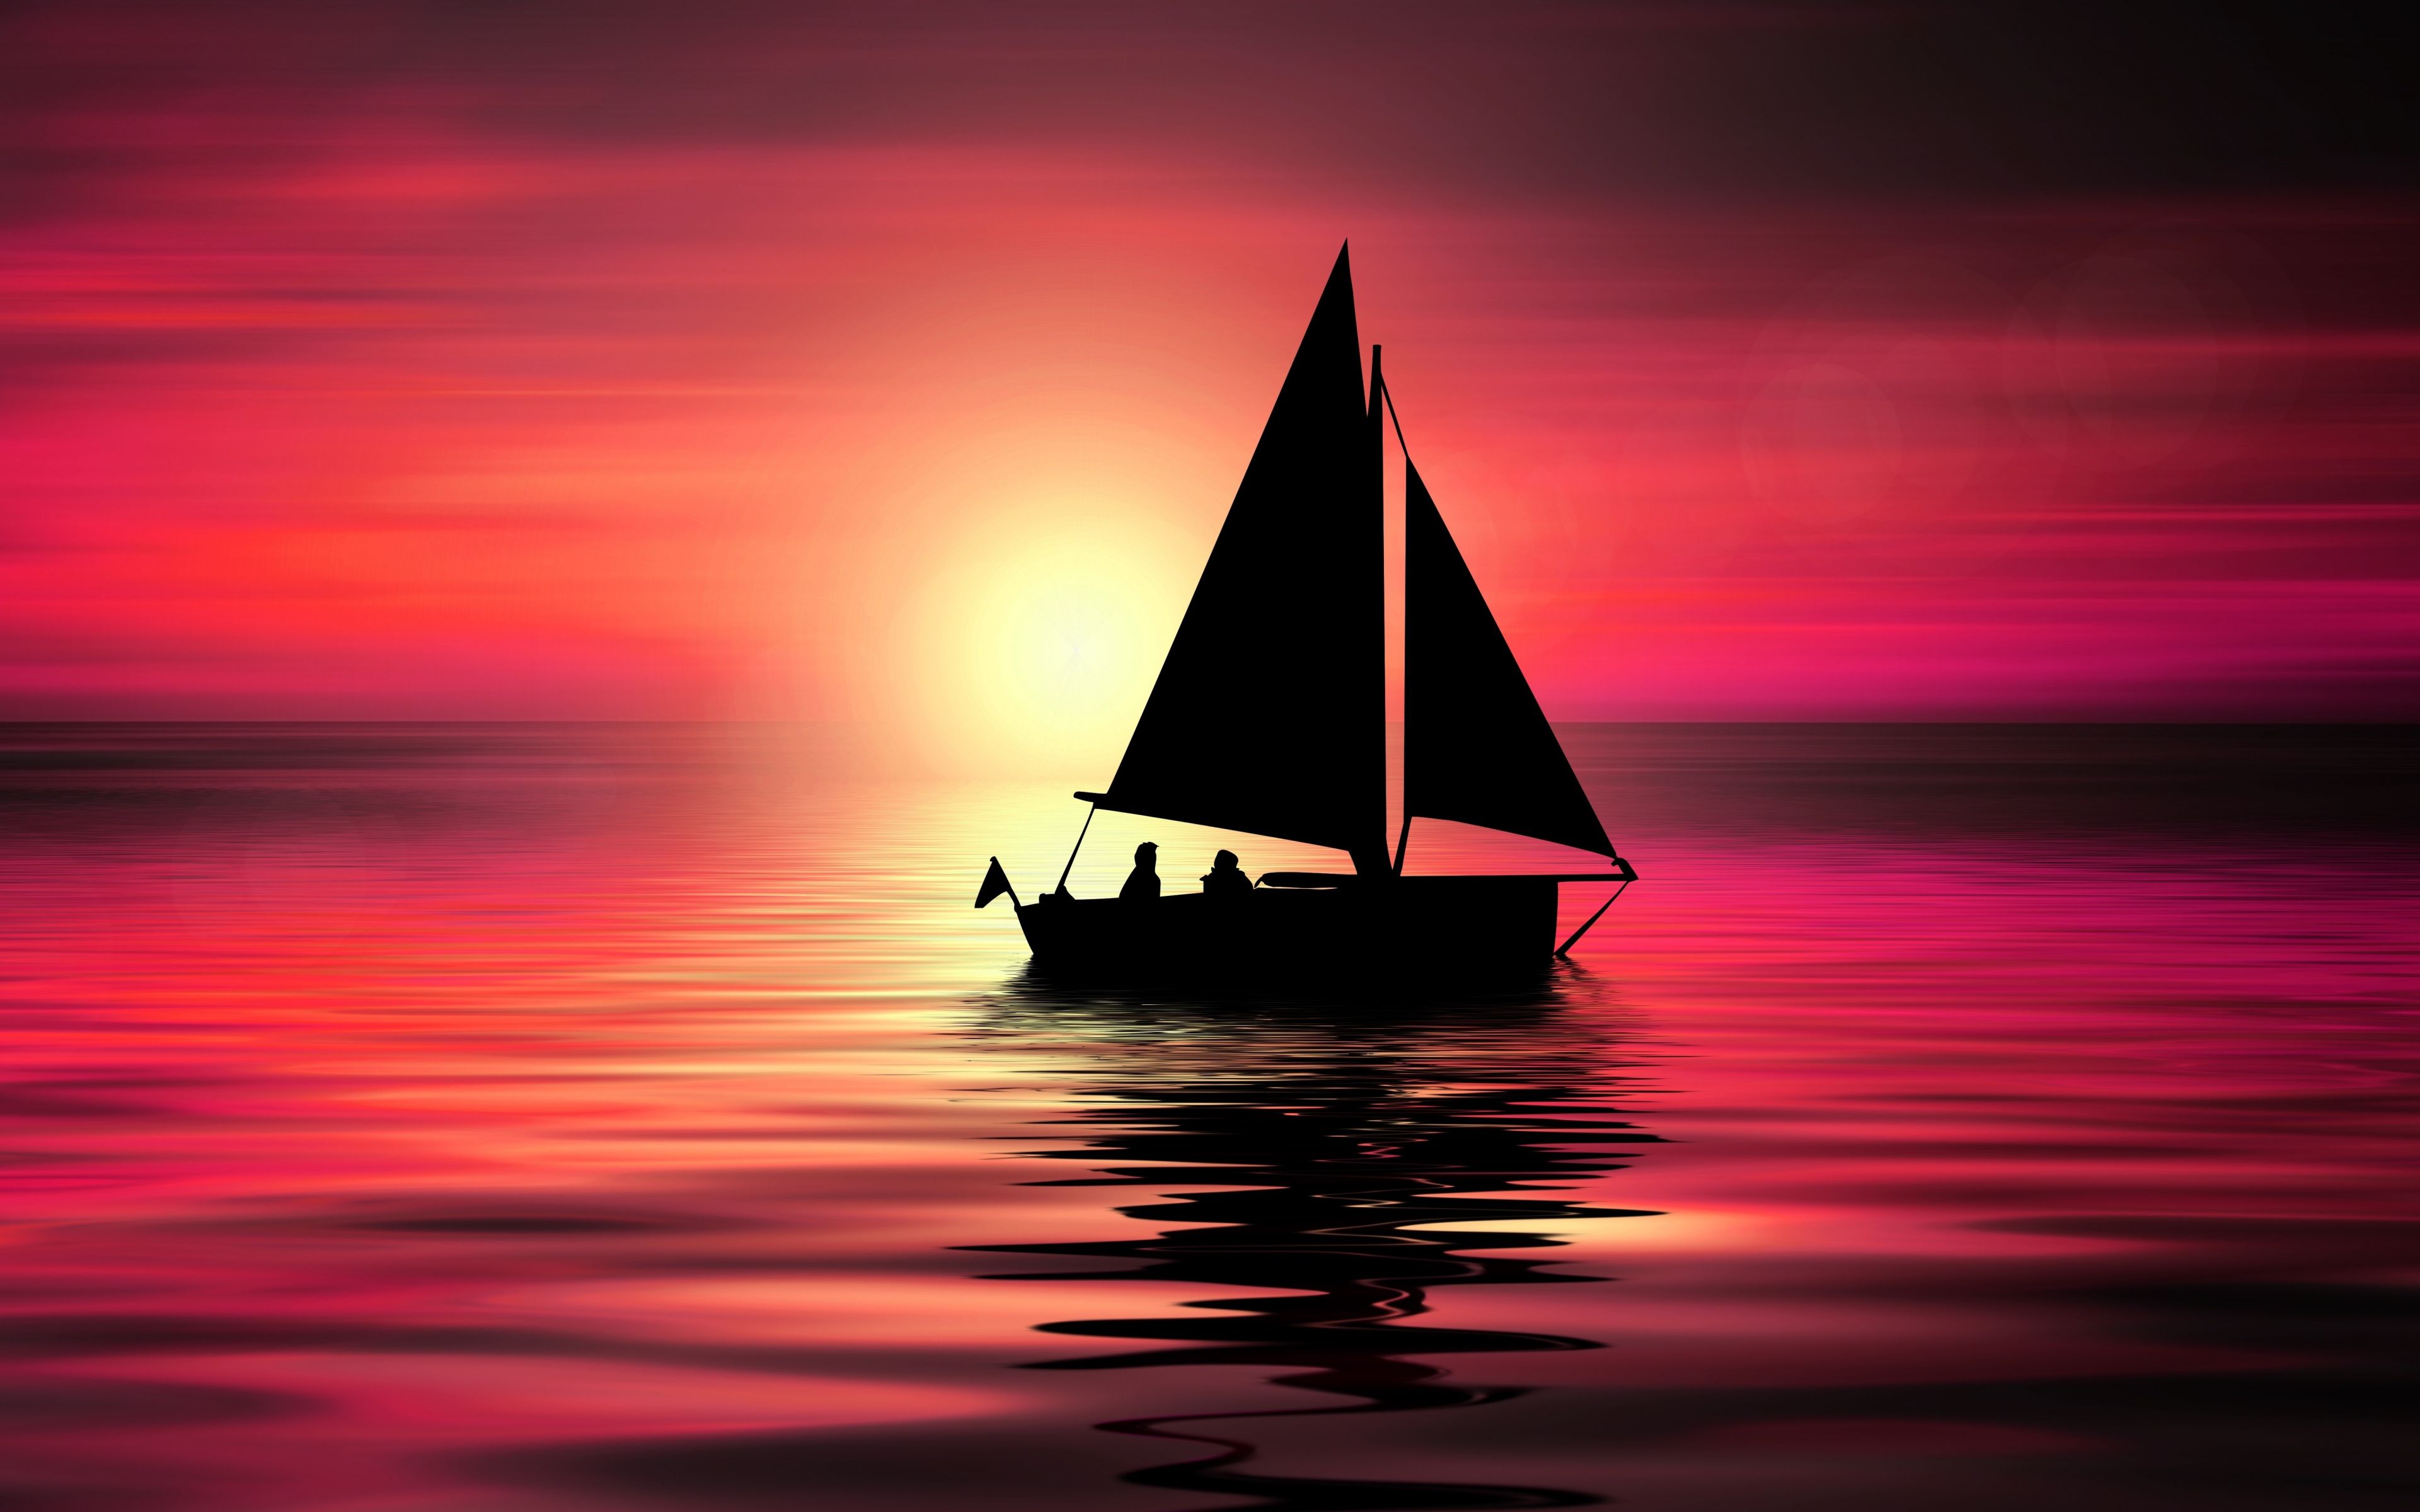 Download 3840x2400 wallpaper artwork, sailboat, sunset, silhouette